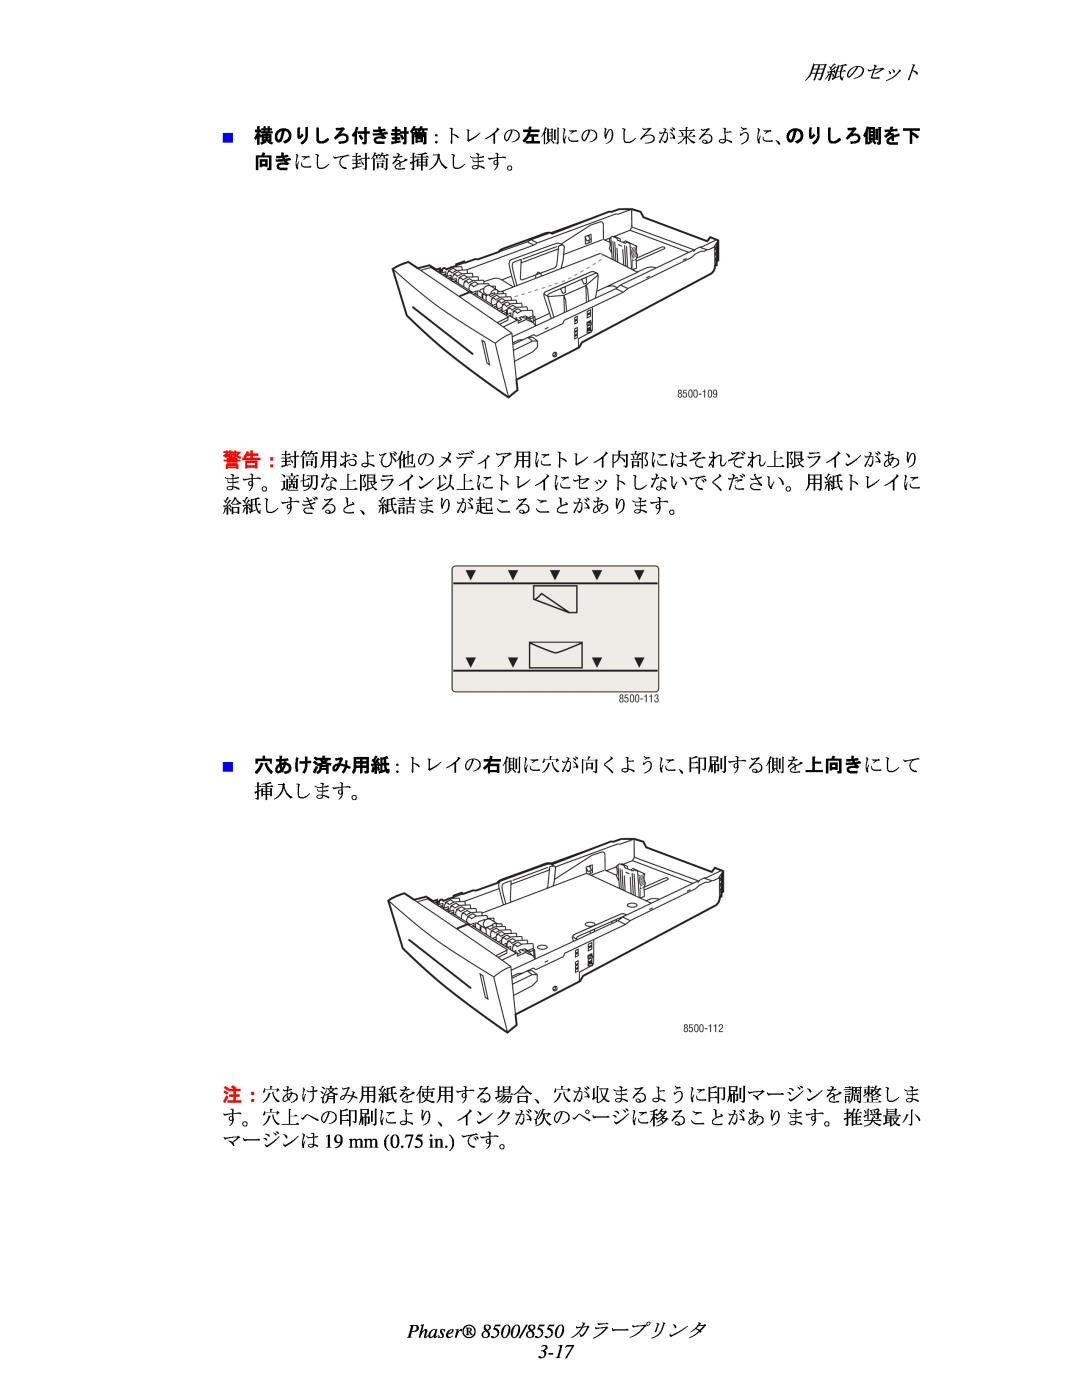 Xerox manual 用紙のセ ッ ト, Phaser 8500/8550 カ ラープ リ ン タ 3-17 